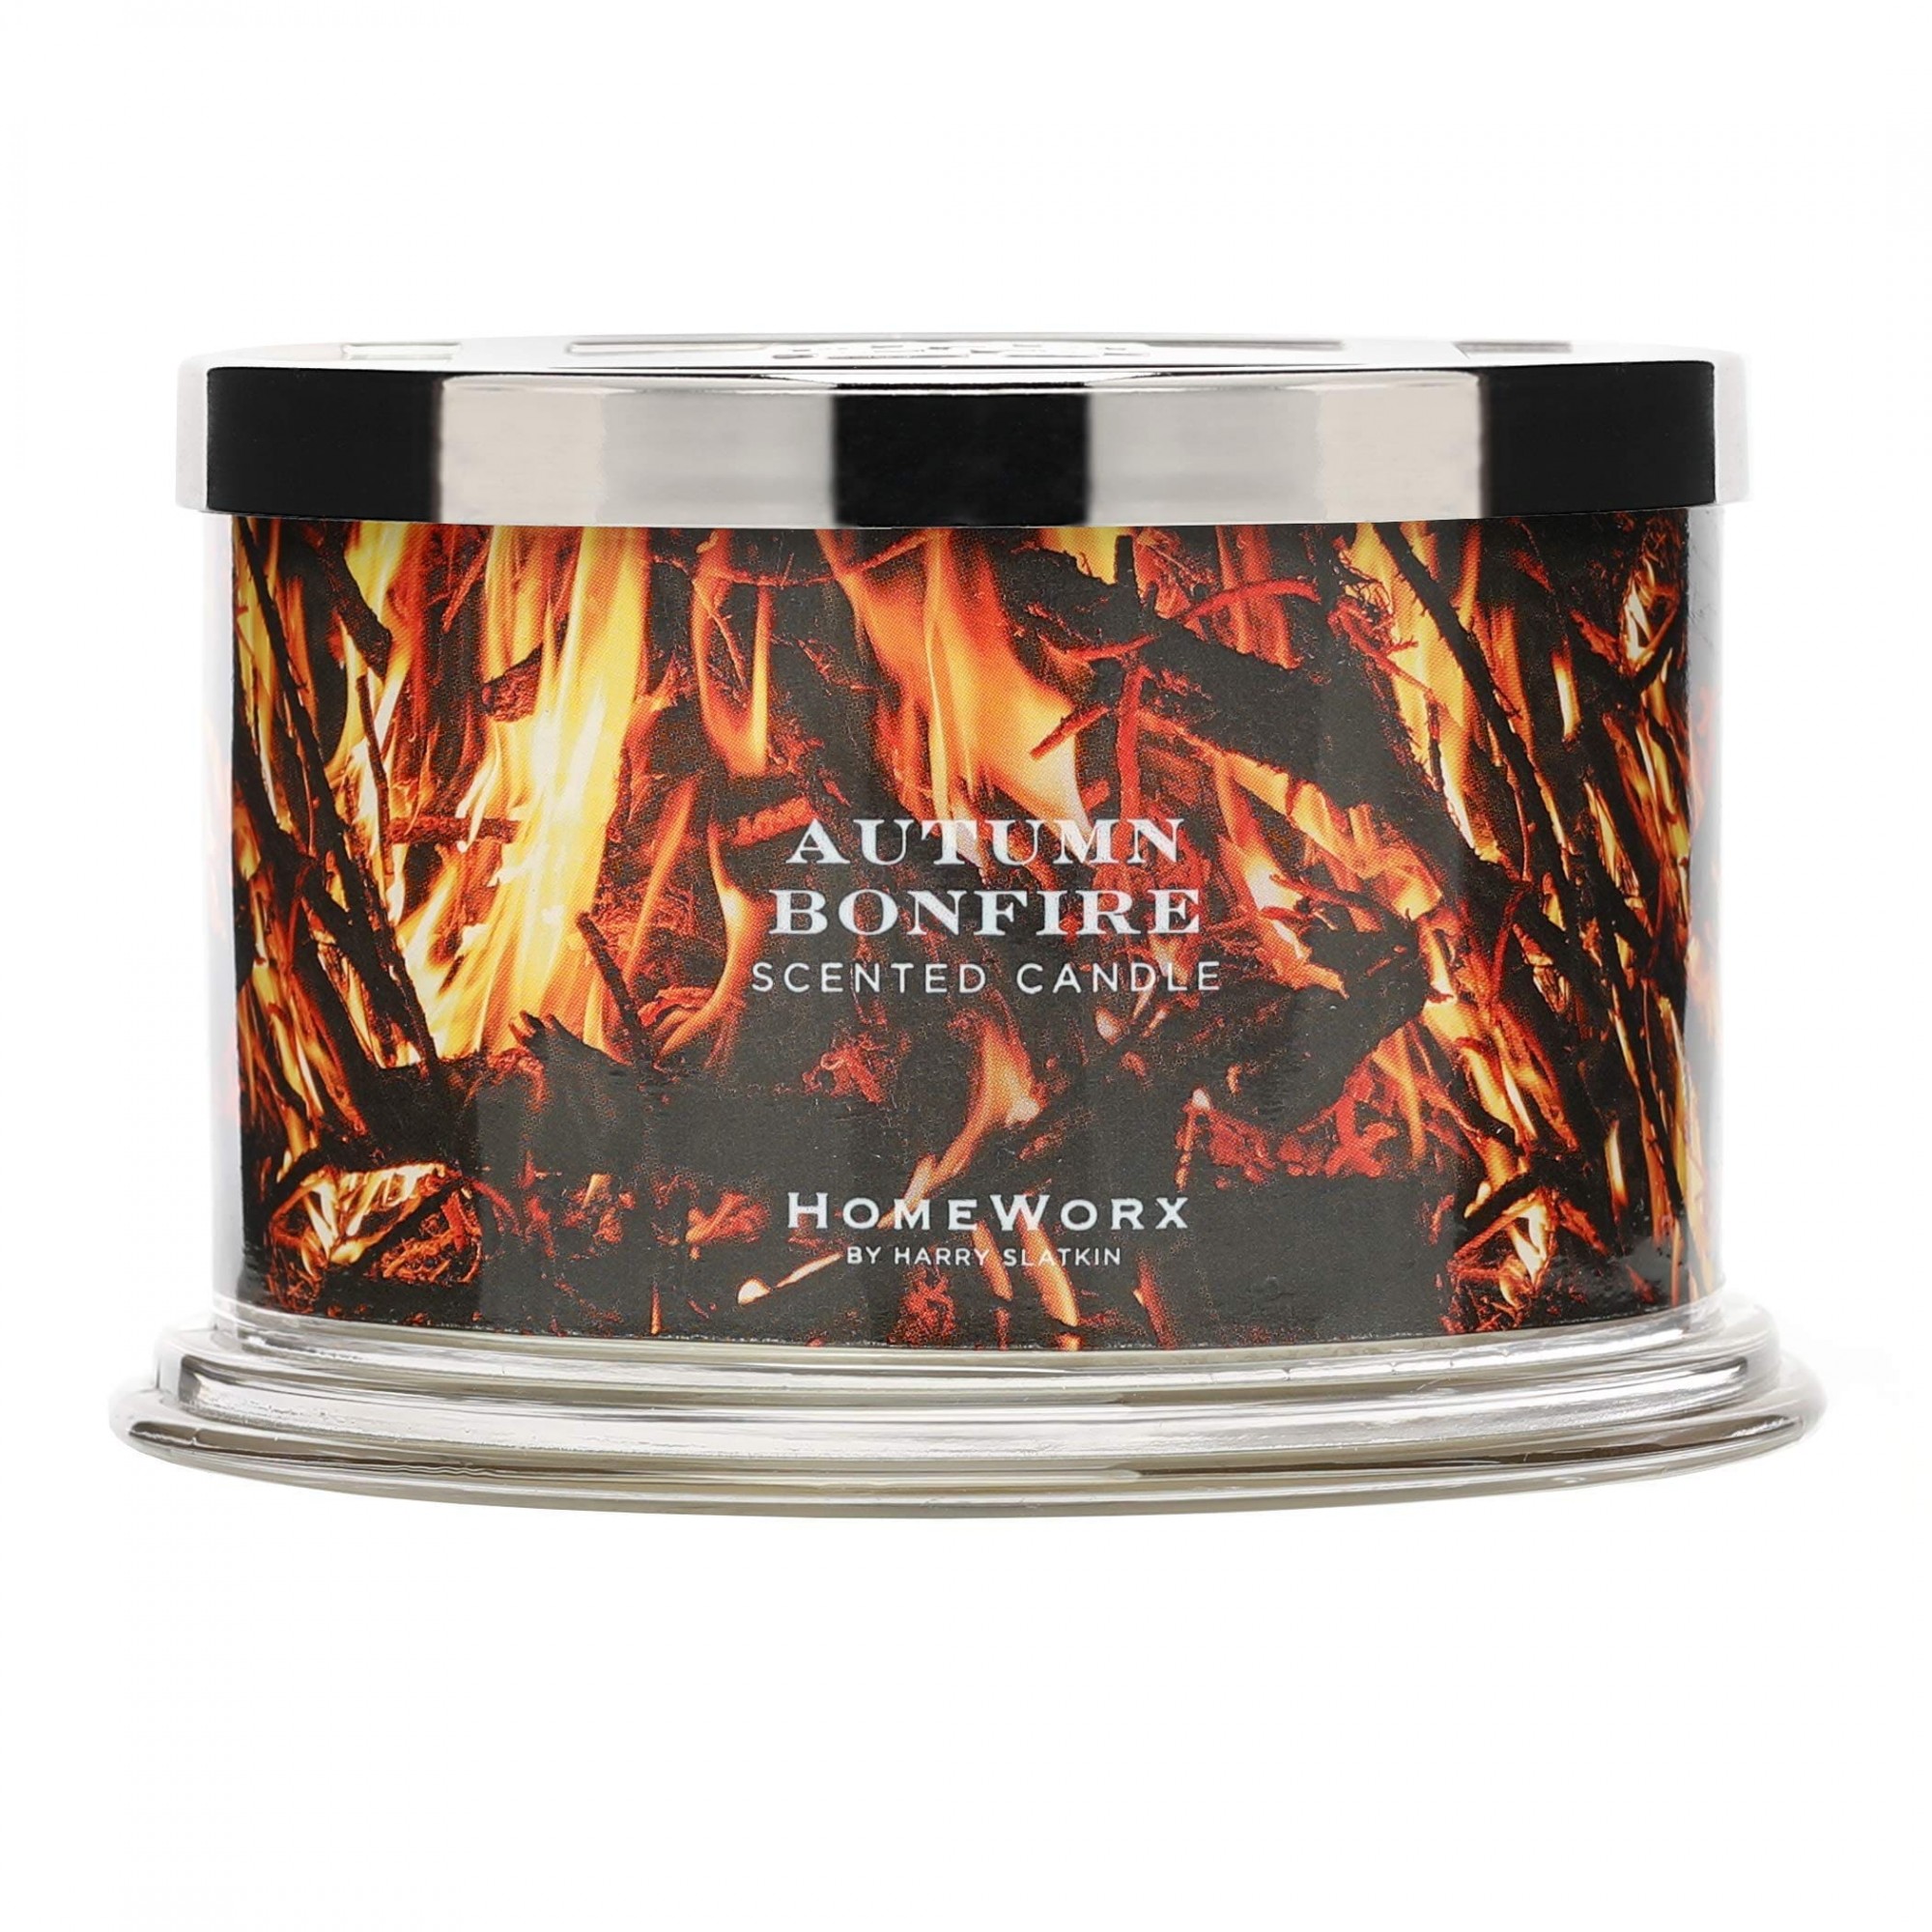 Homeworx by Harry Slatkin Autumn Bonfire 4 Wick Candle